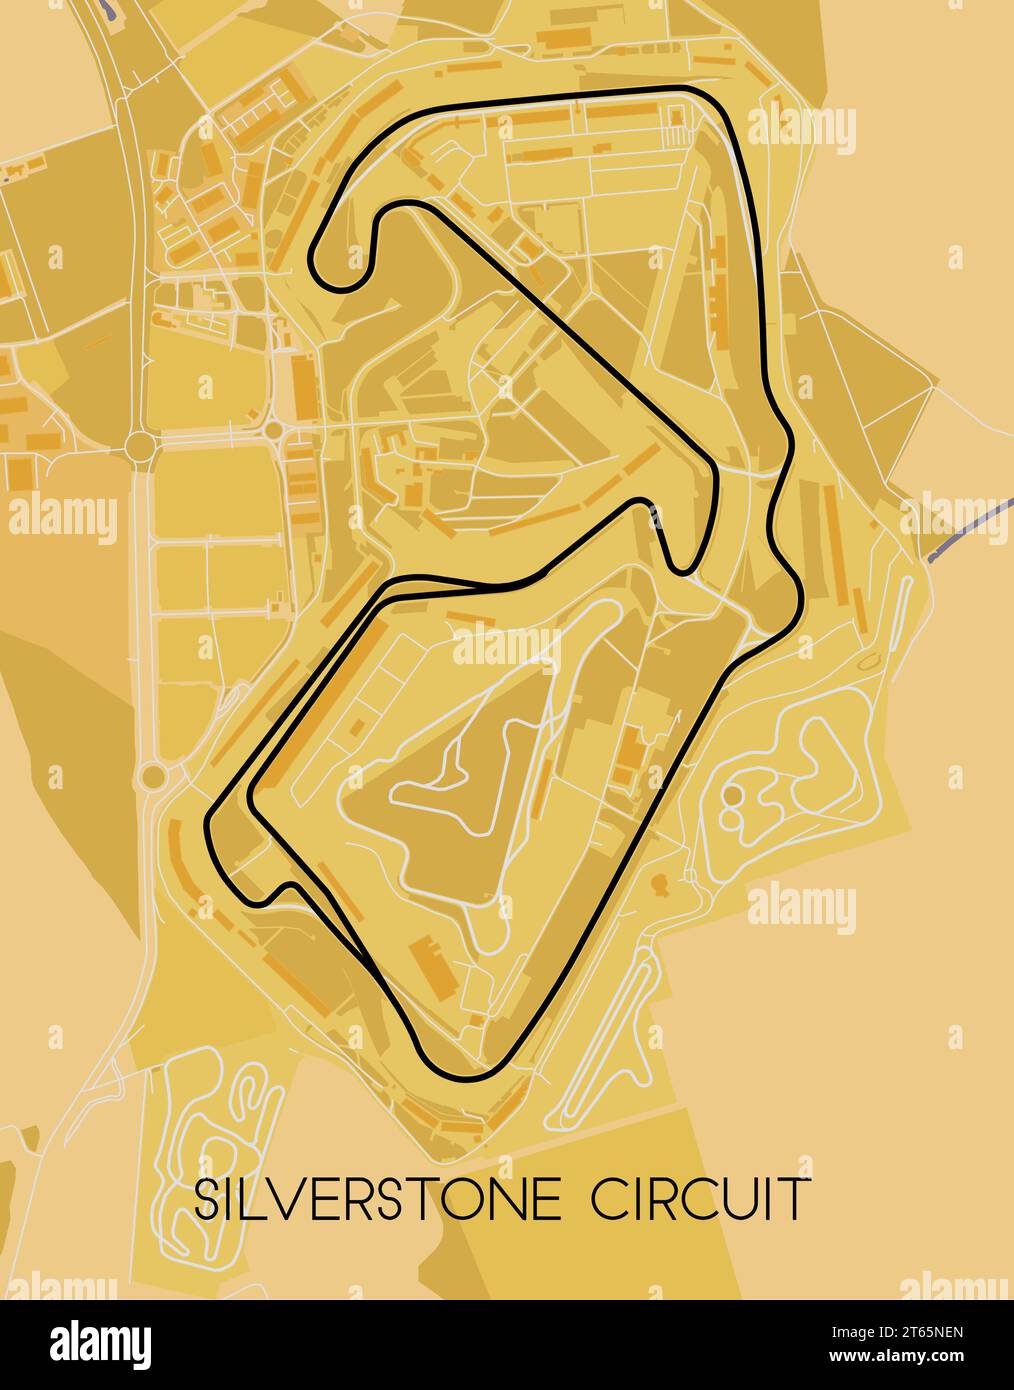 Silverstone car race Circuit United Kingdom Stock Vector